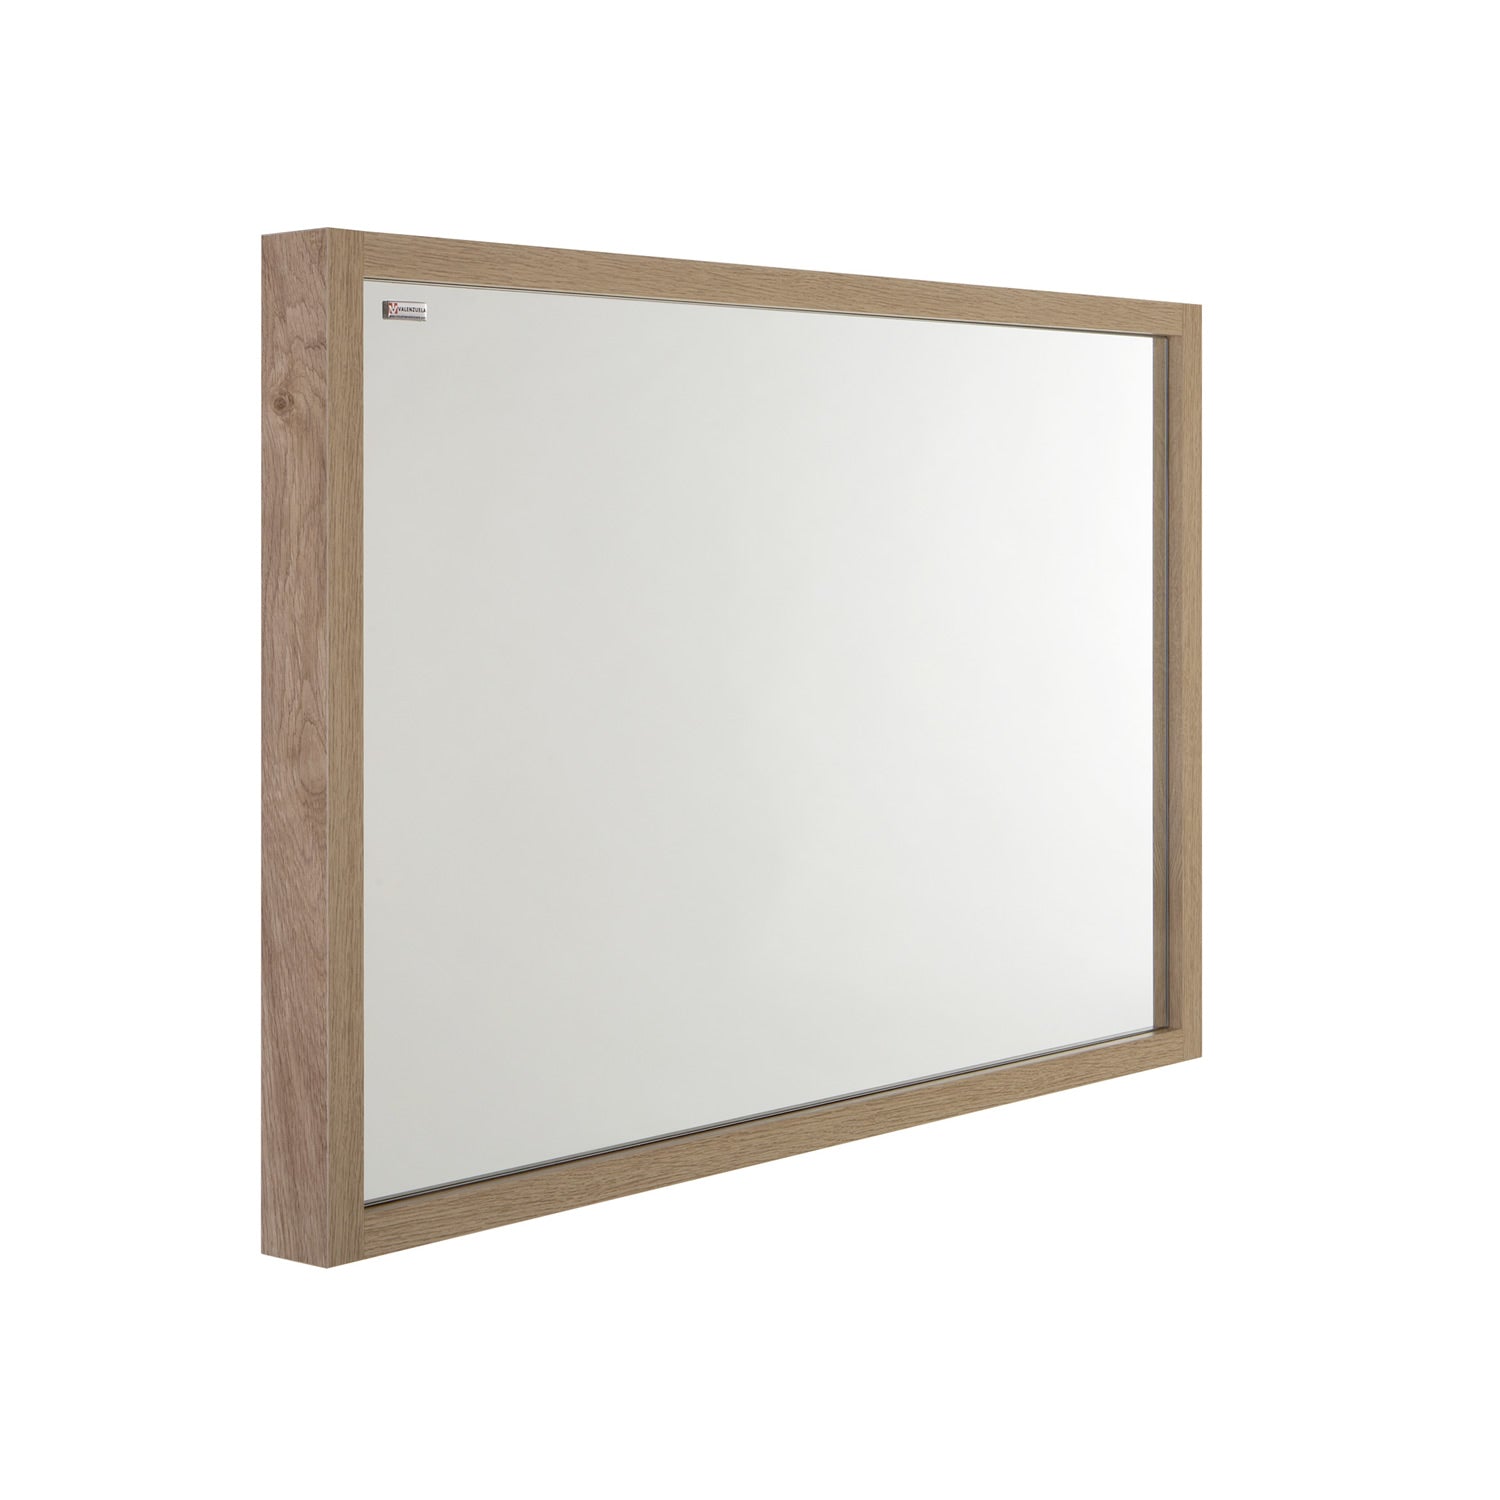 48" Slim Frame Bathroom Vanity Mirror, Wall Mount, Oak, Serie Tino by VALENZUELA